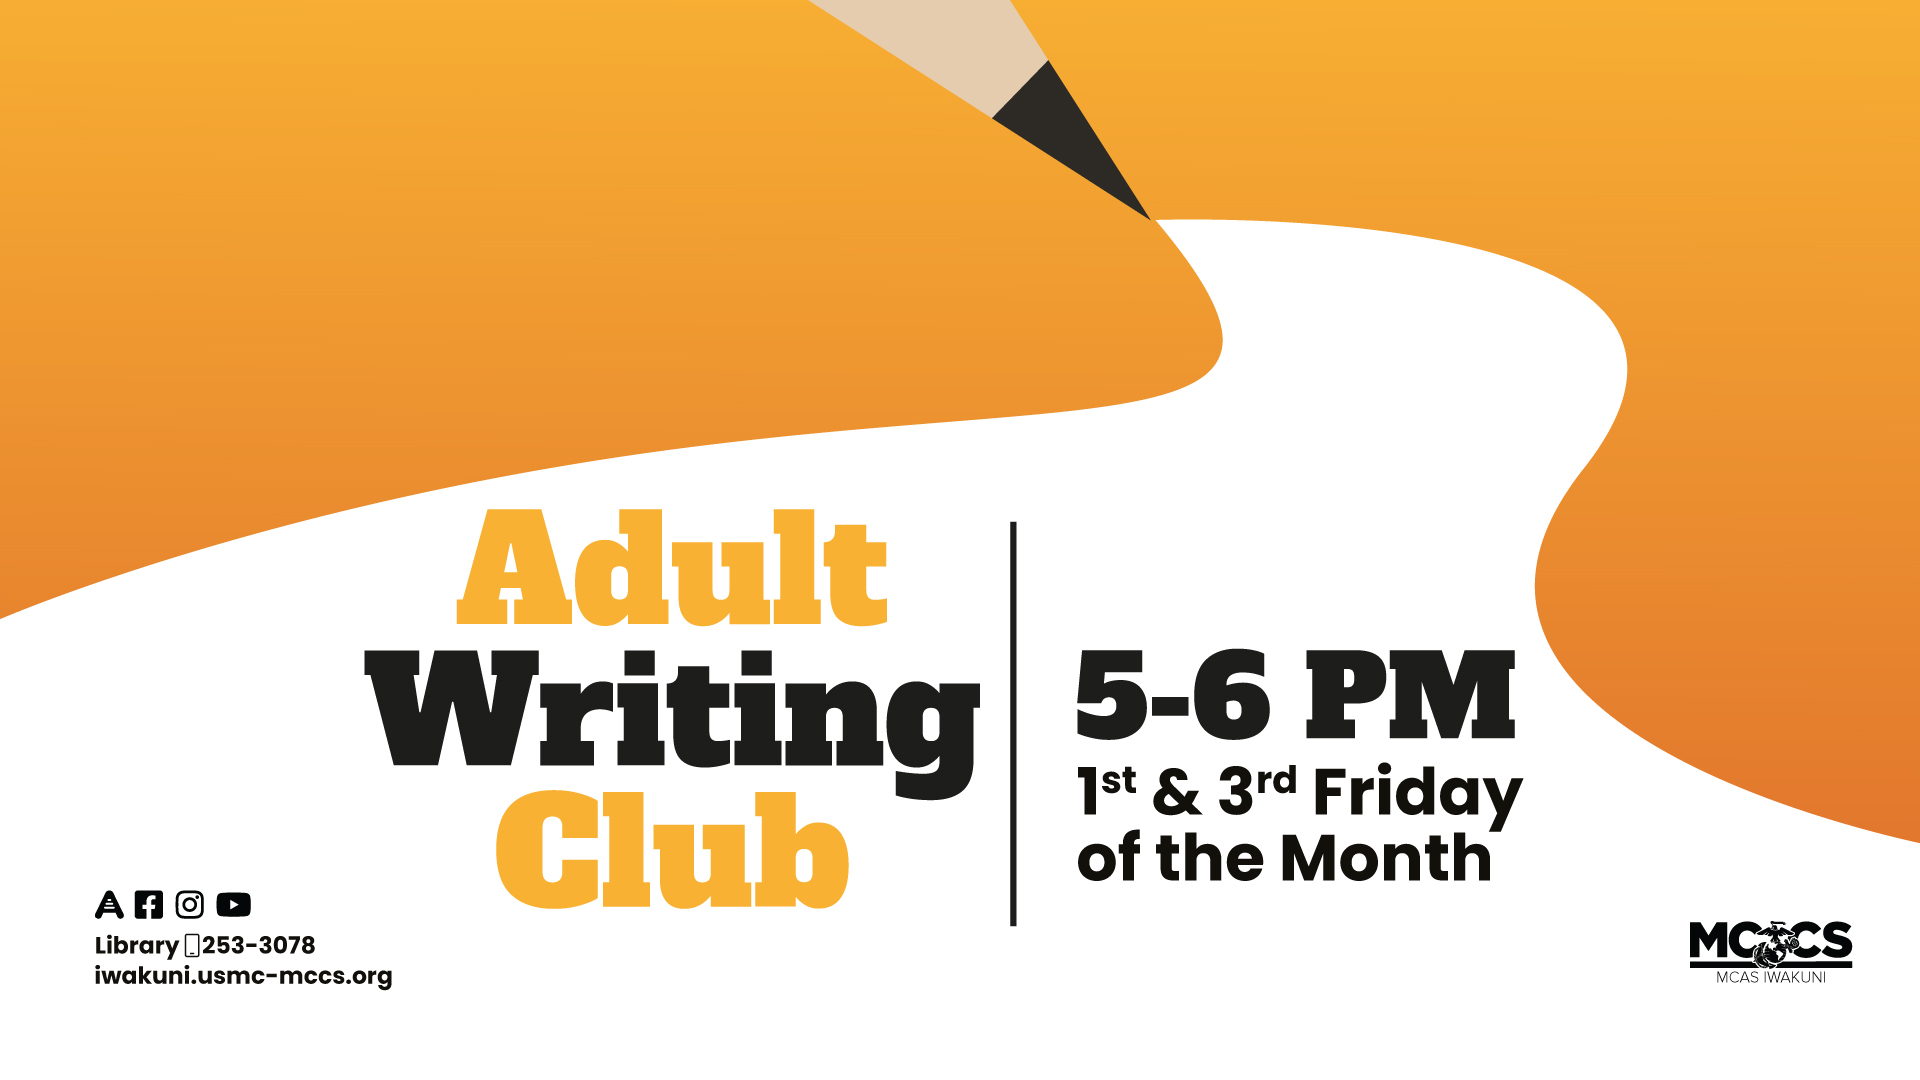 Adult Writing Club